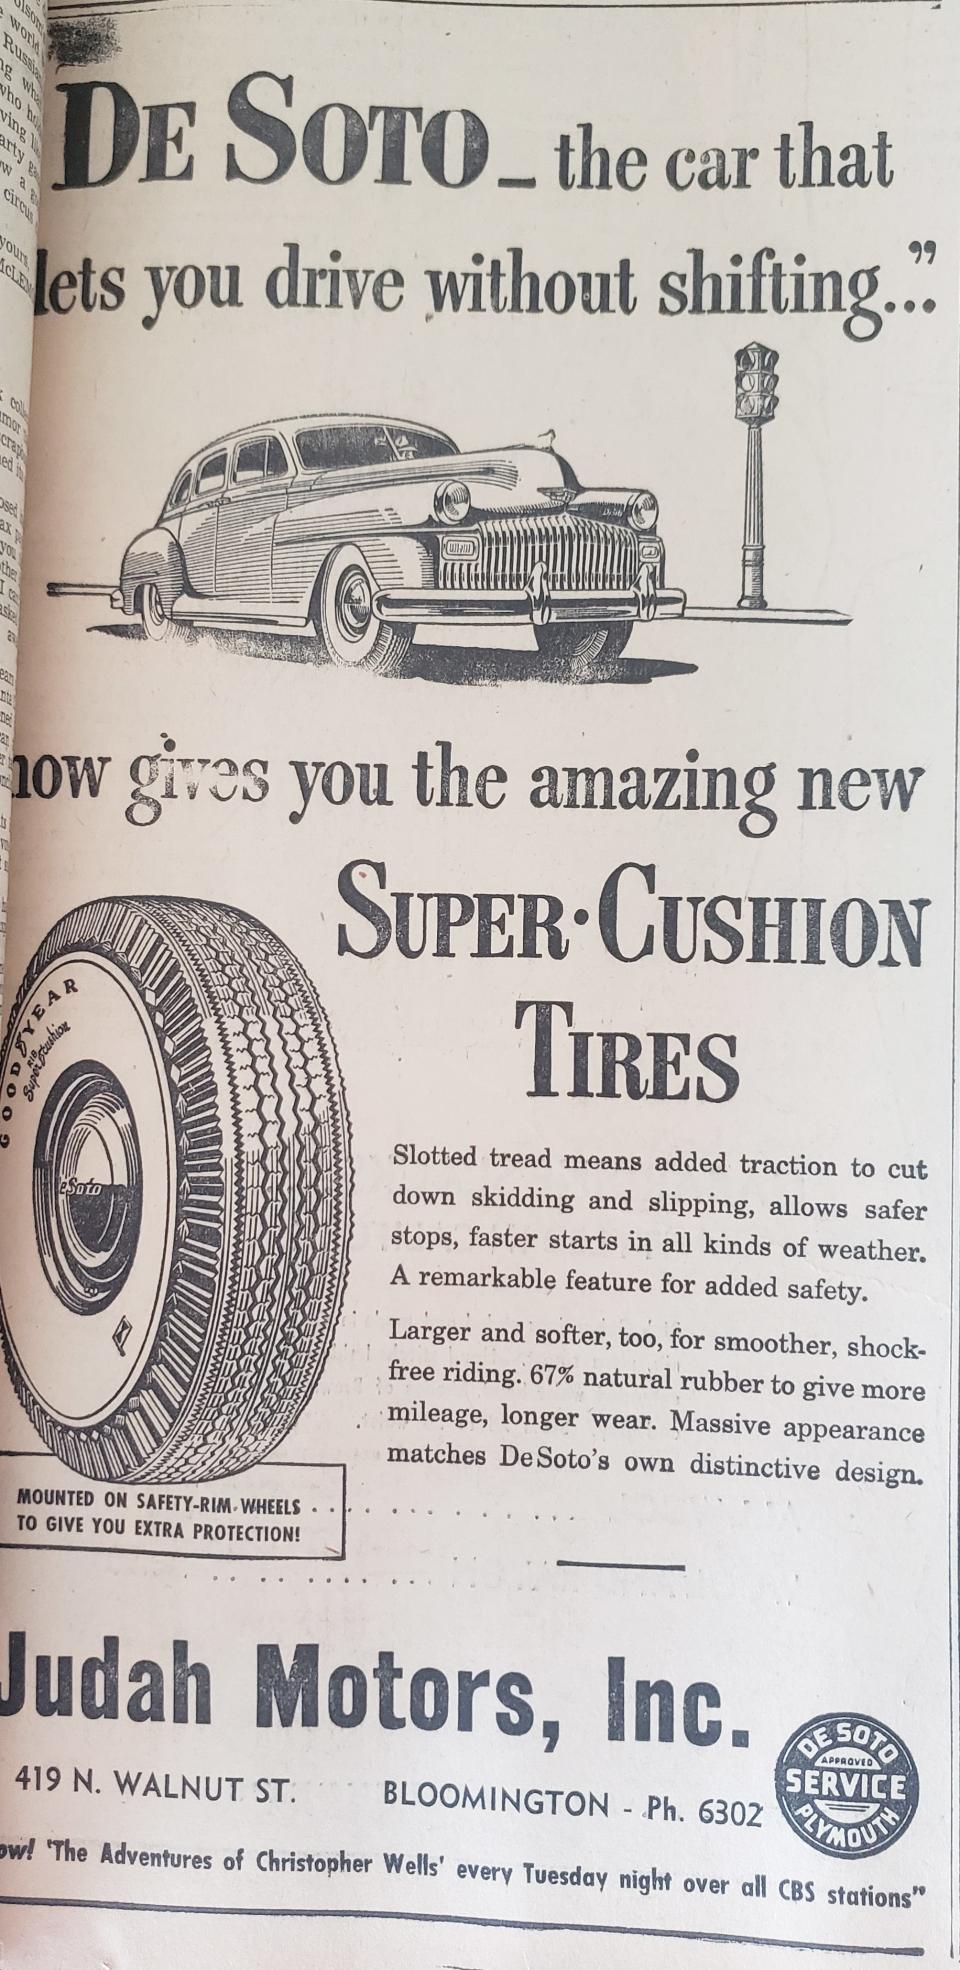 Tires for sale at Judah Motors in 1948